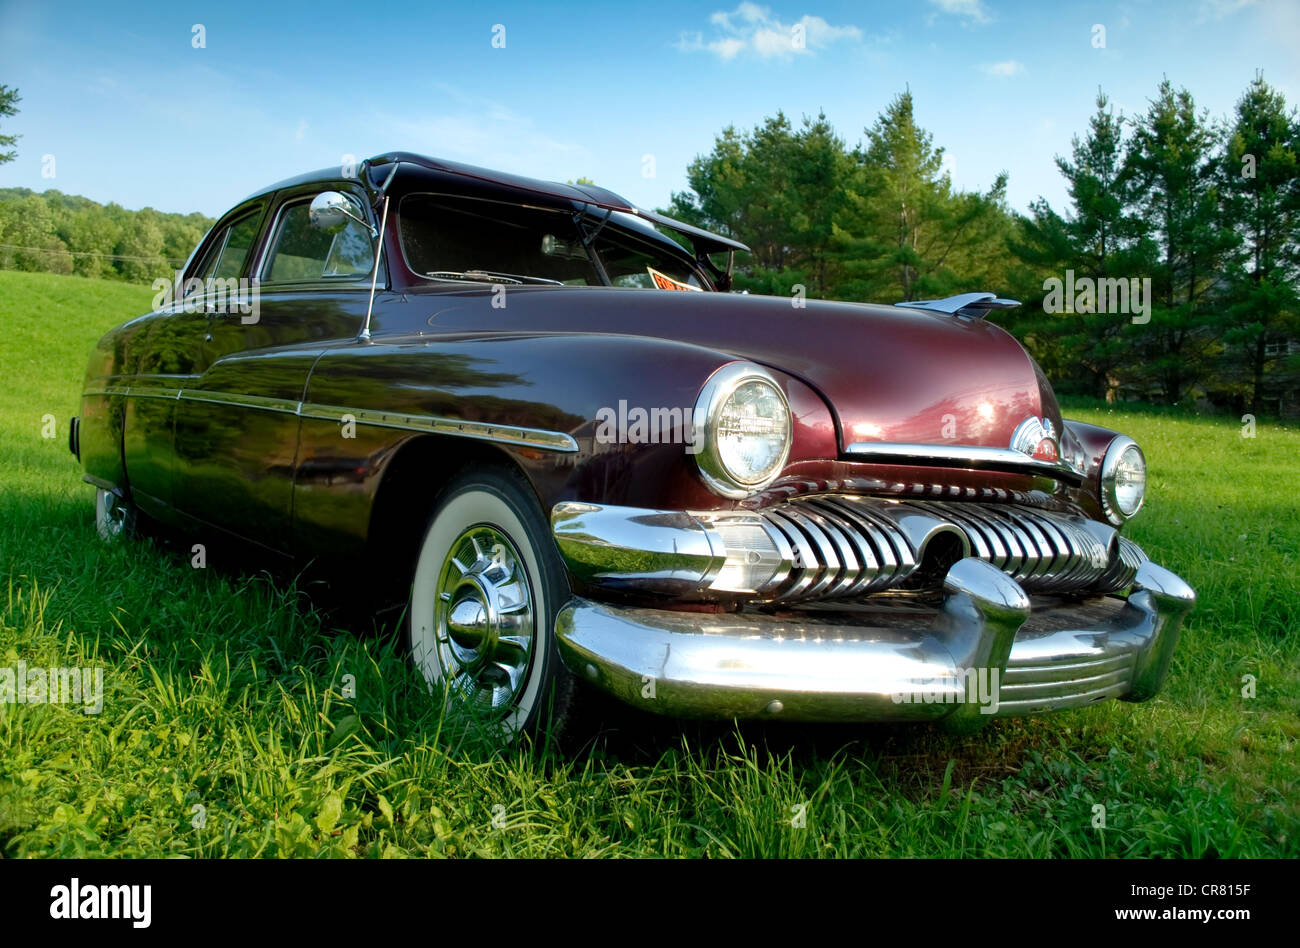 Metallic plum colored vintage 1950's American Automobile Stock Photo